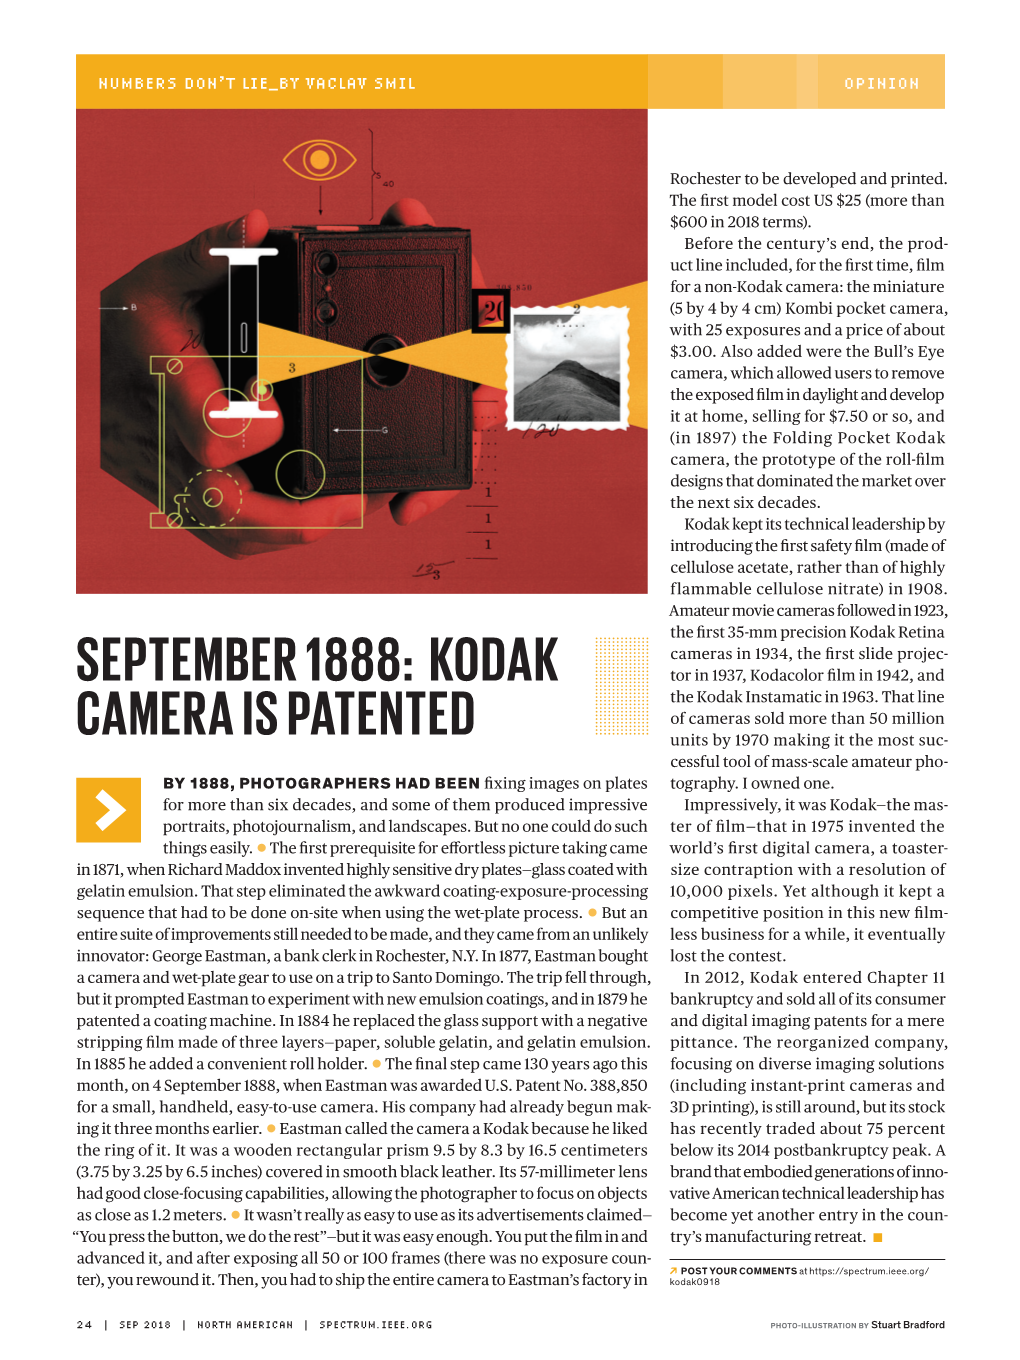 September 1888: Kodak Camera Is Patented